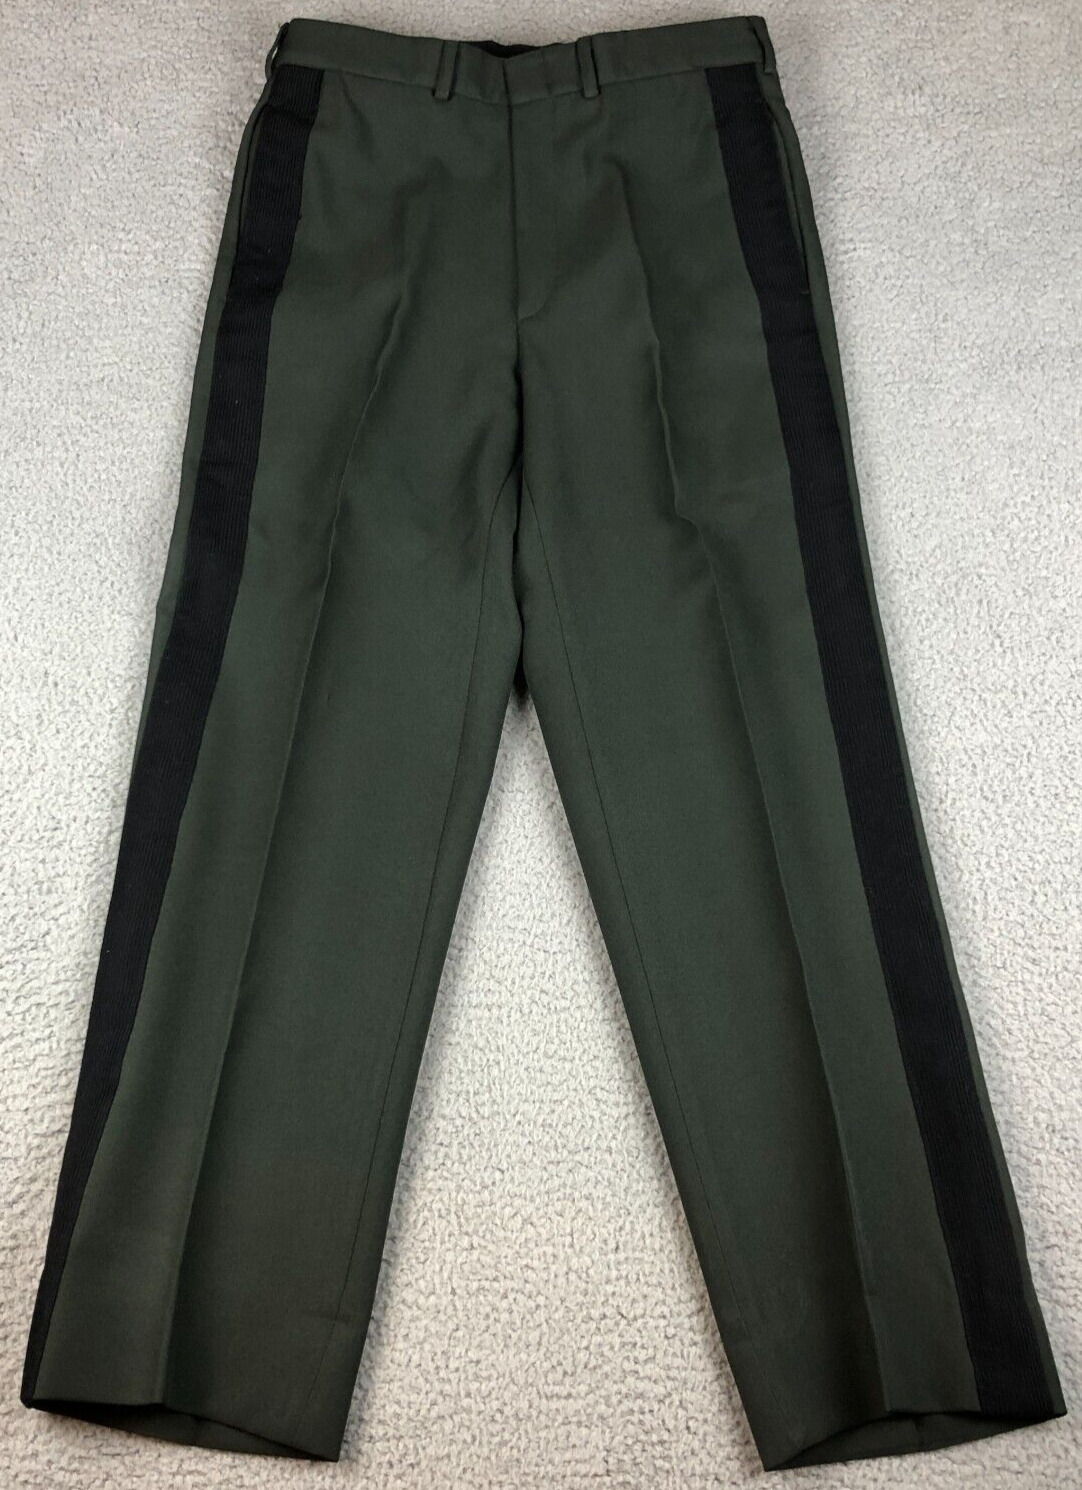 Uniart Military Parade Dress Pants Mens Size 30 Hunter Green Black Stripe Army